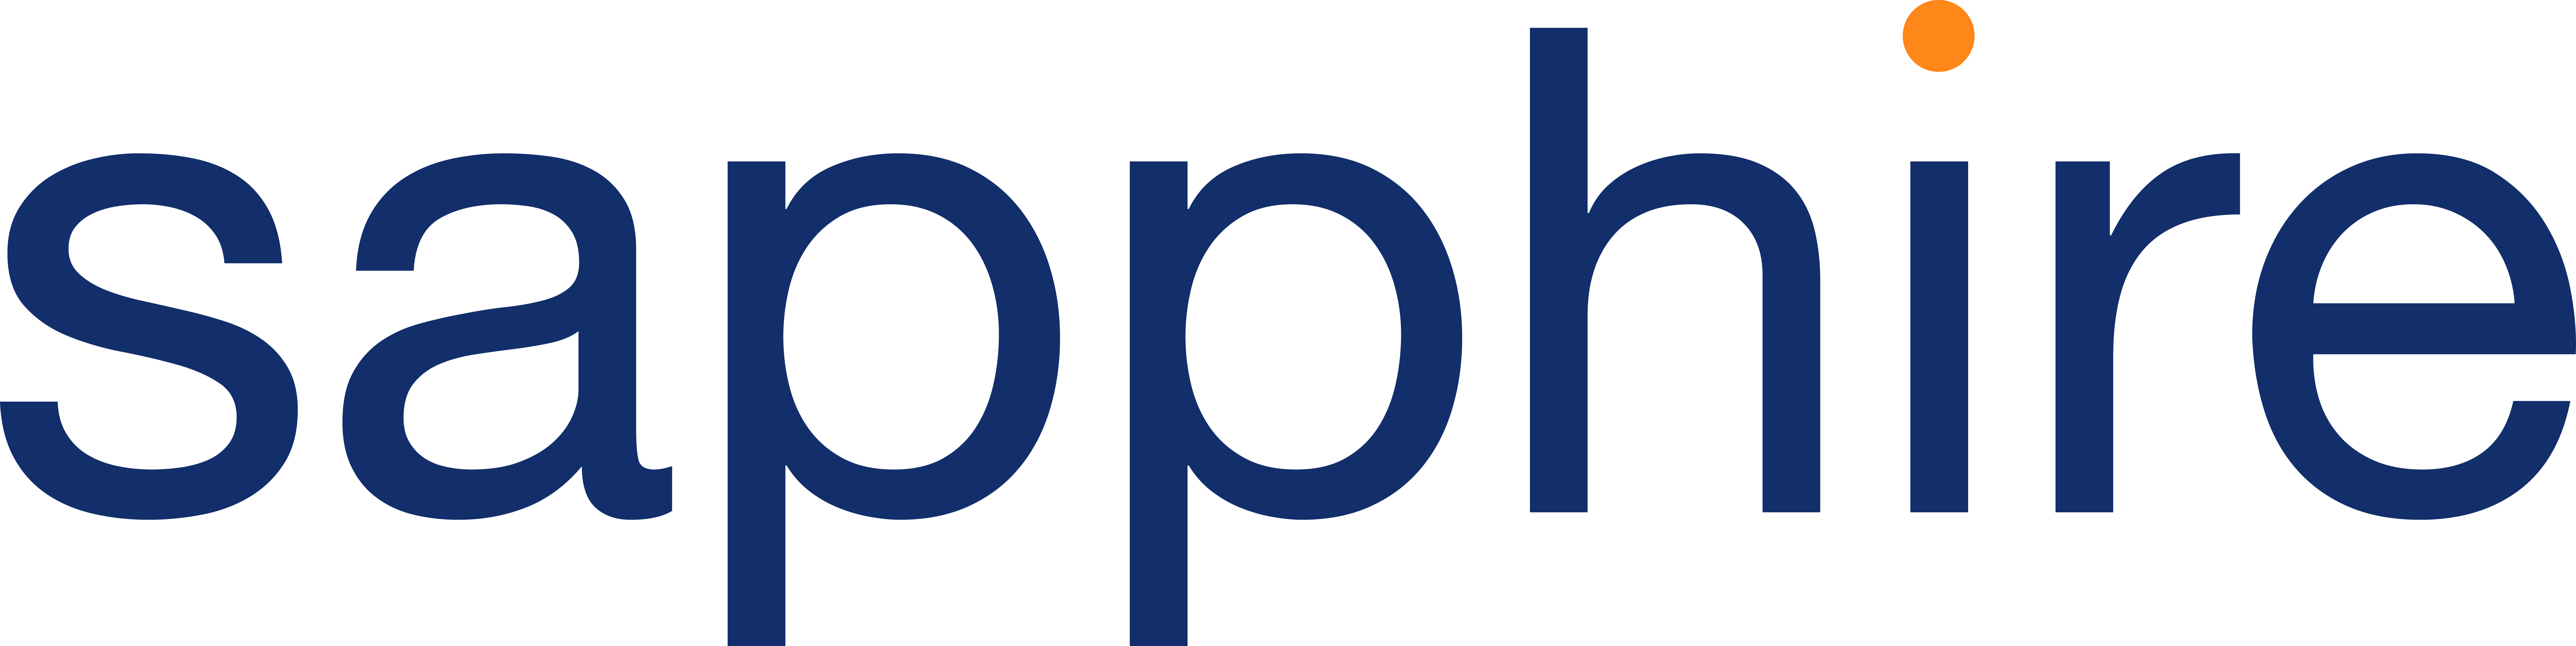 Sapphire Logo - sapphire logo high res - Sapphire Systems blog